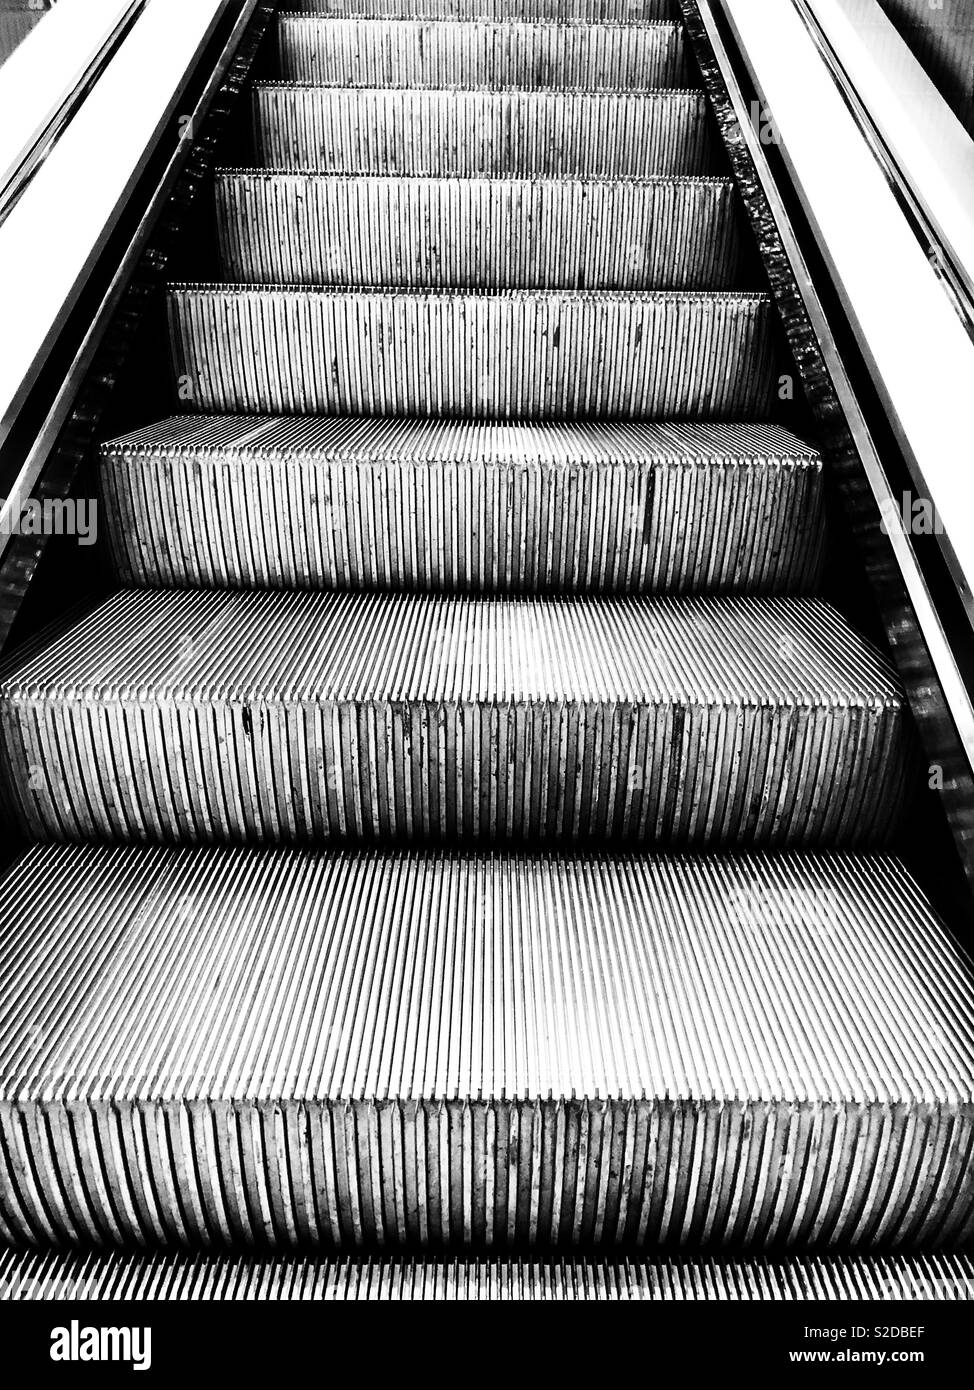 Black and white monochrome image escalator Stock Photo